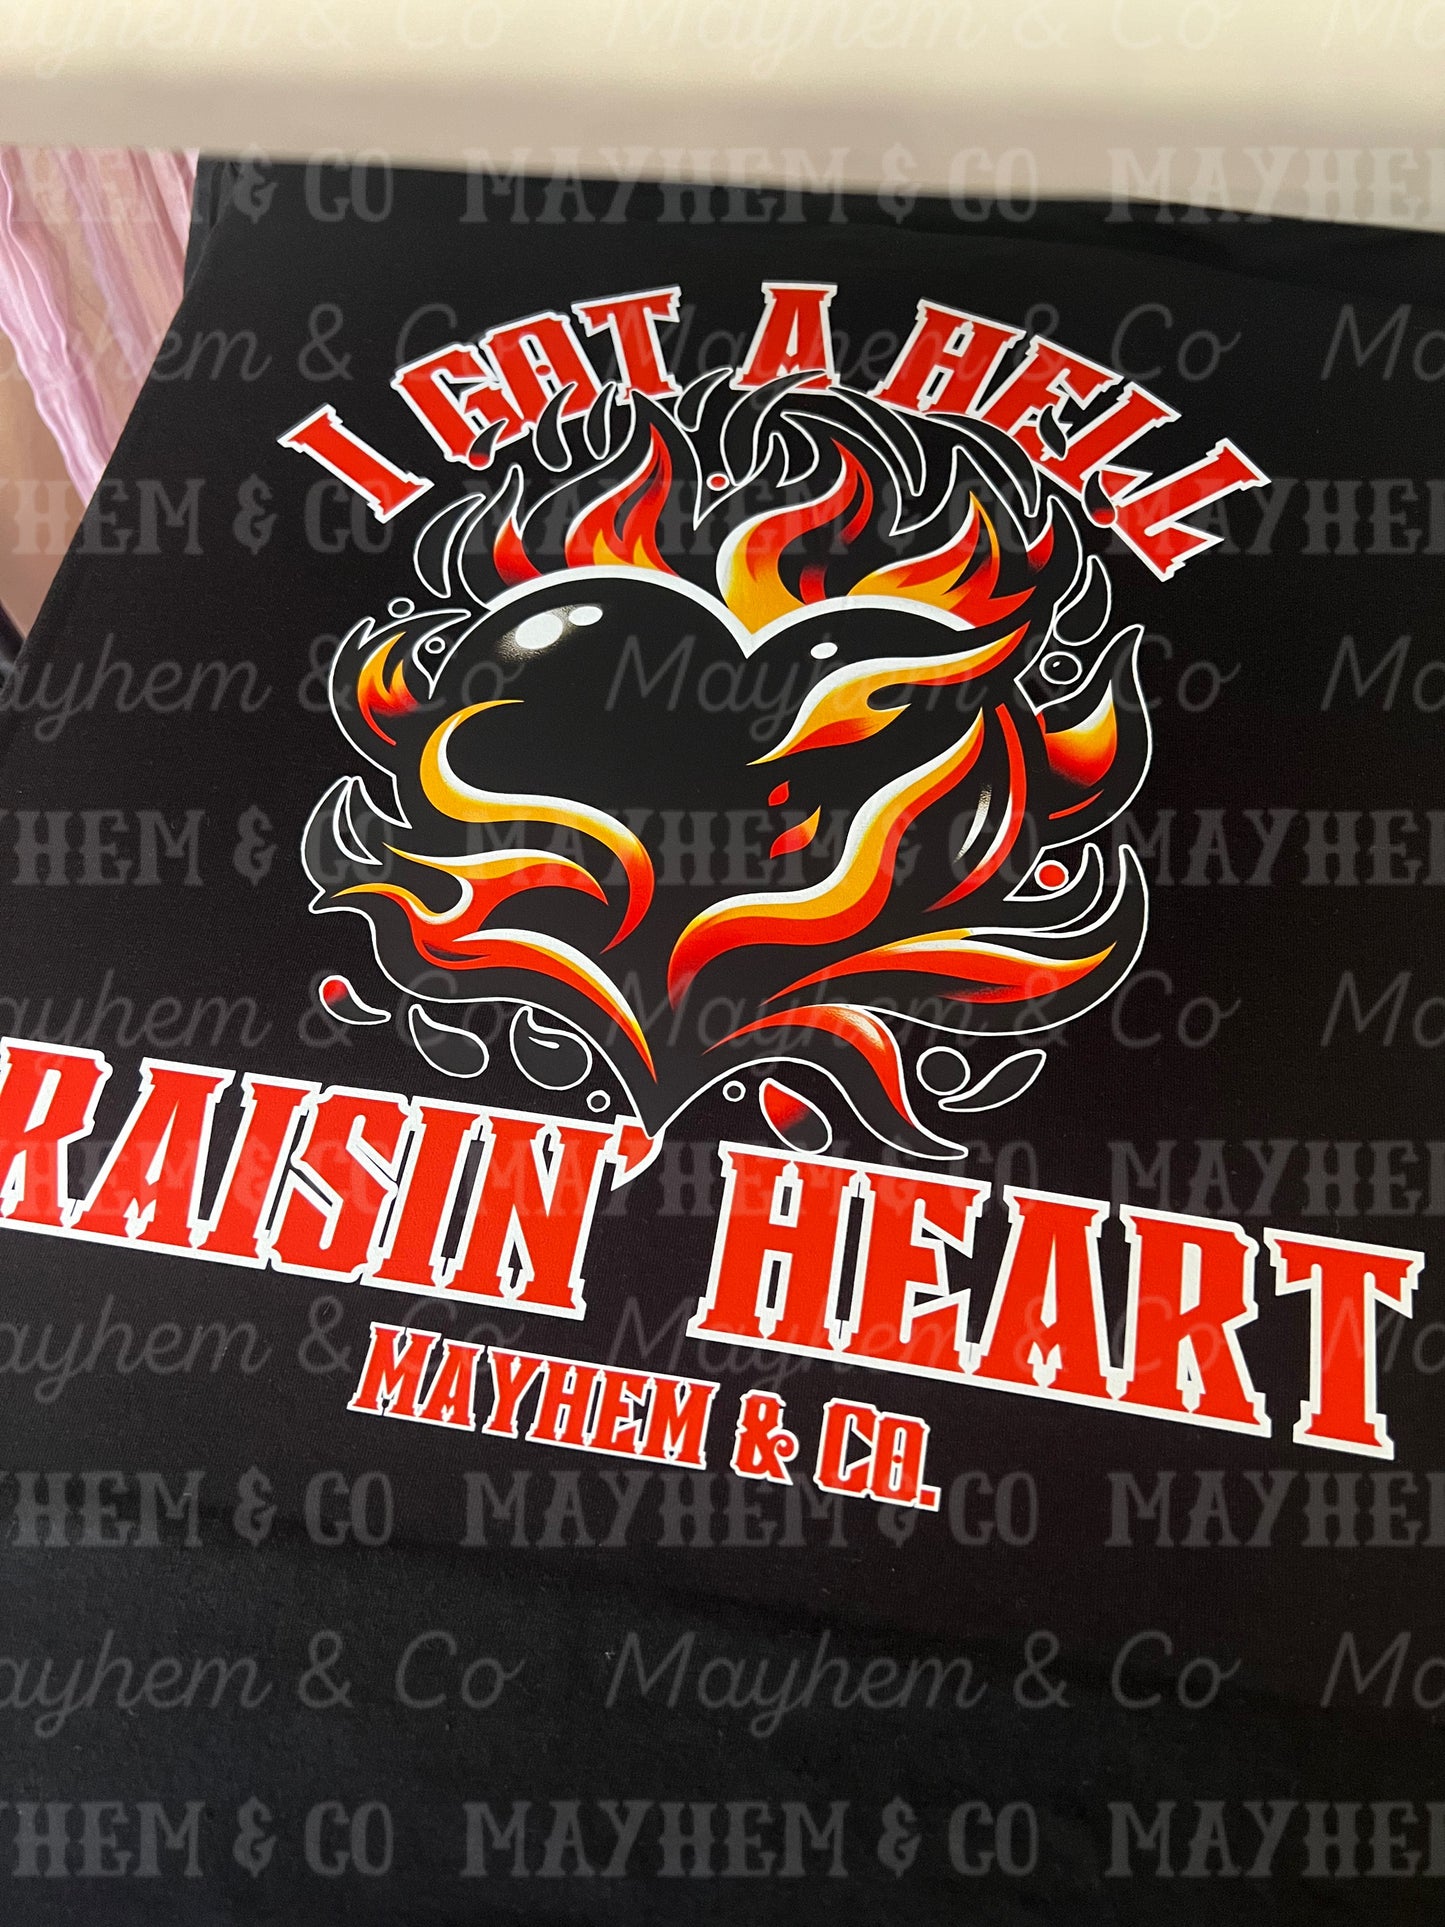 Hell Raisin’ Heart